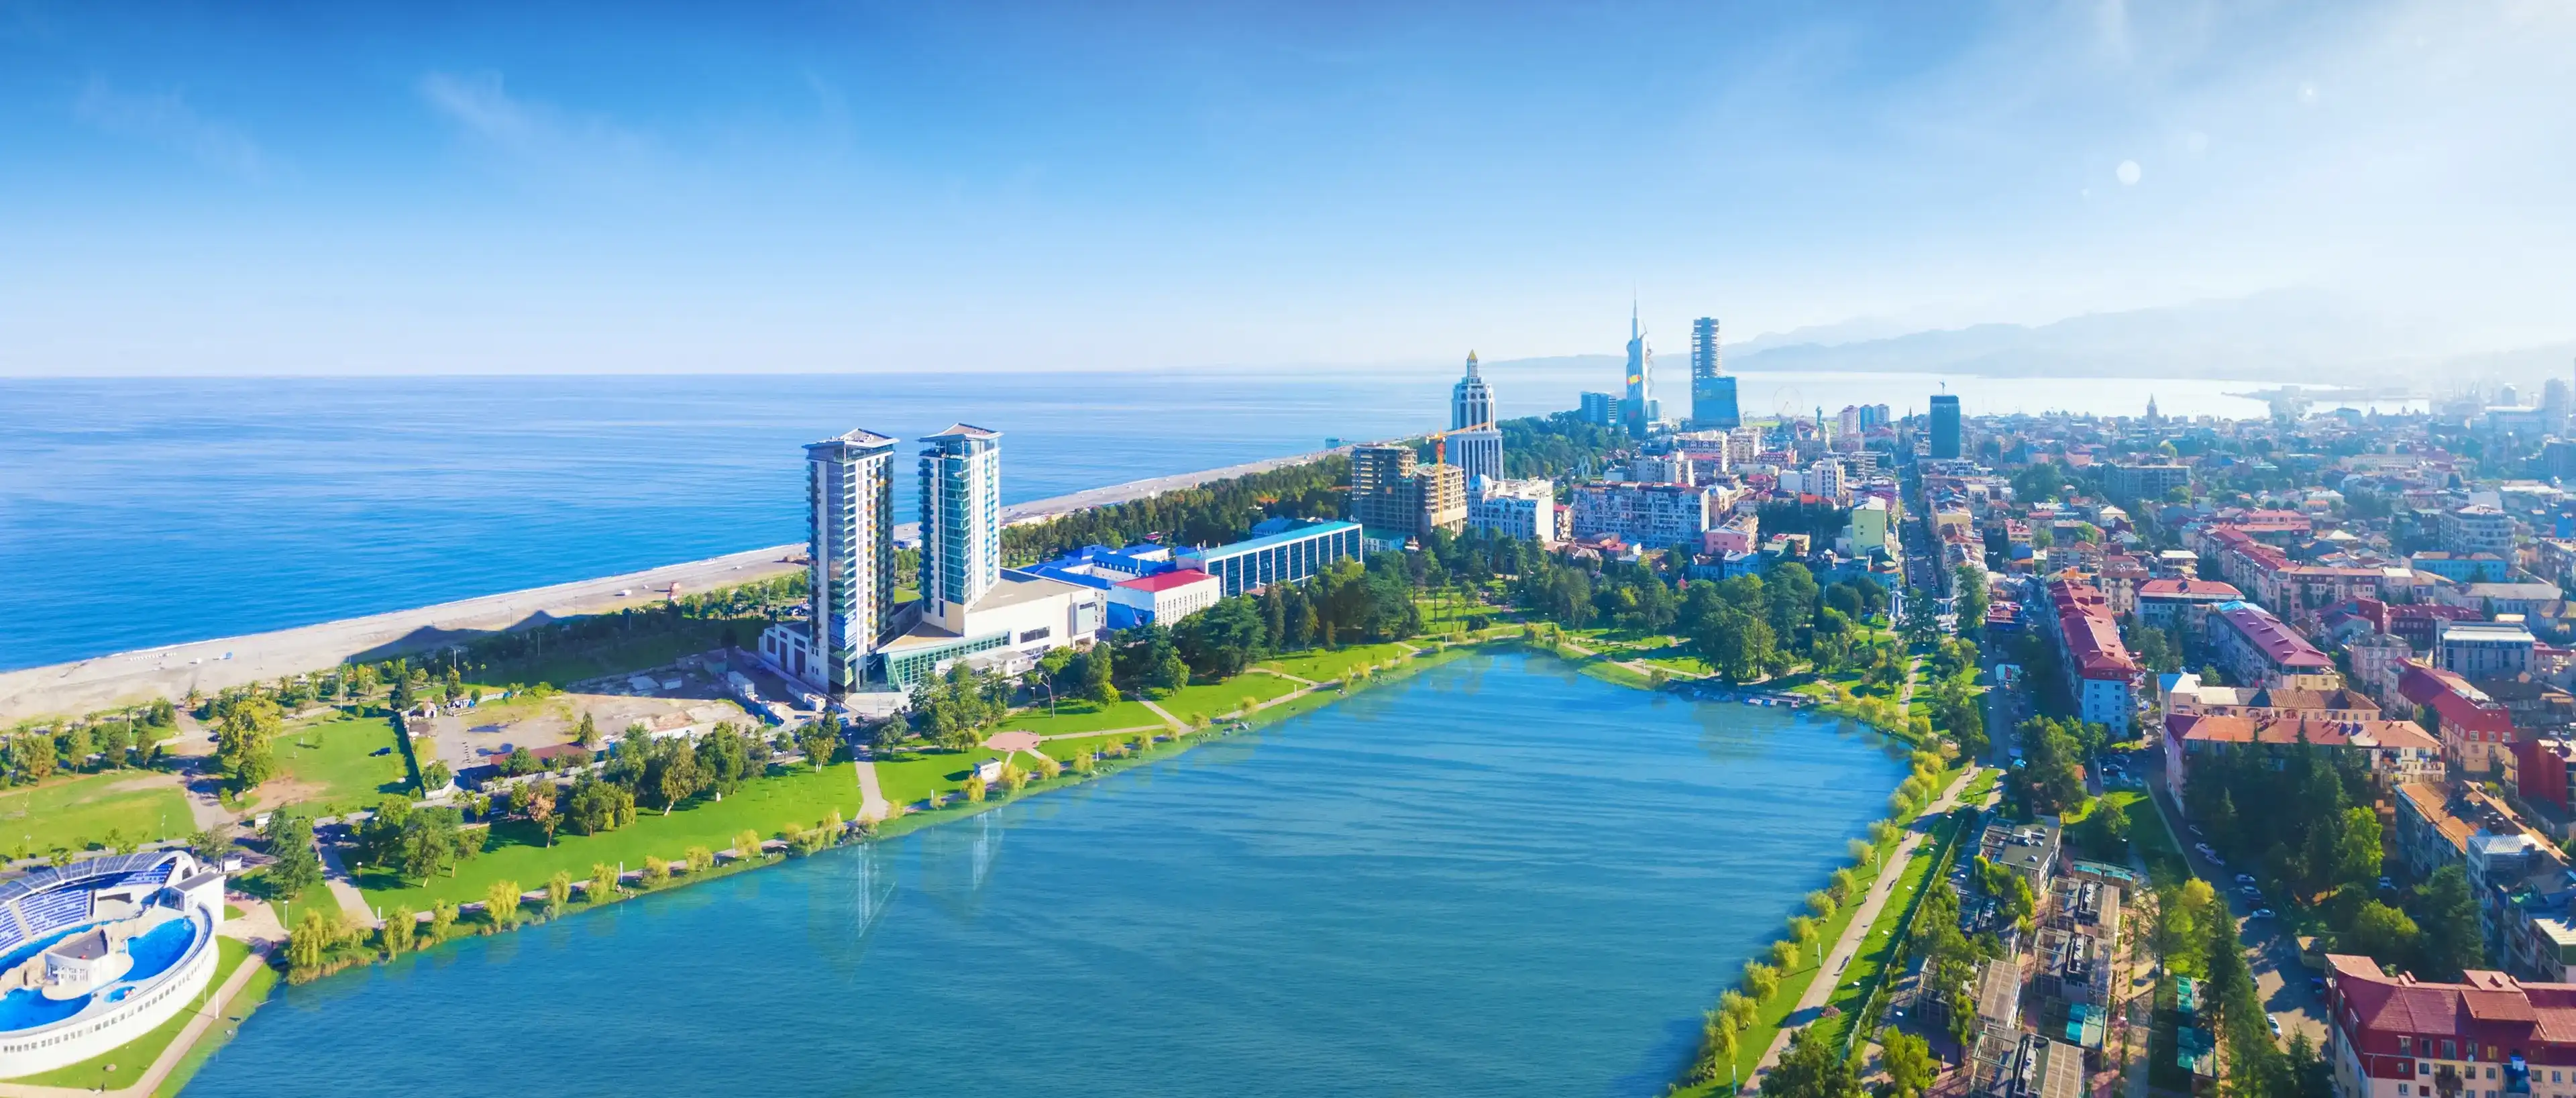 Aerial panoramic image of beautiful Batumi made with drone in sunny summer weather. Batumi is capital of Autonomous Republic of Adjara in Georgia, located on coast of Black Sea.